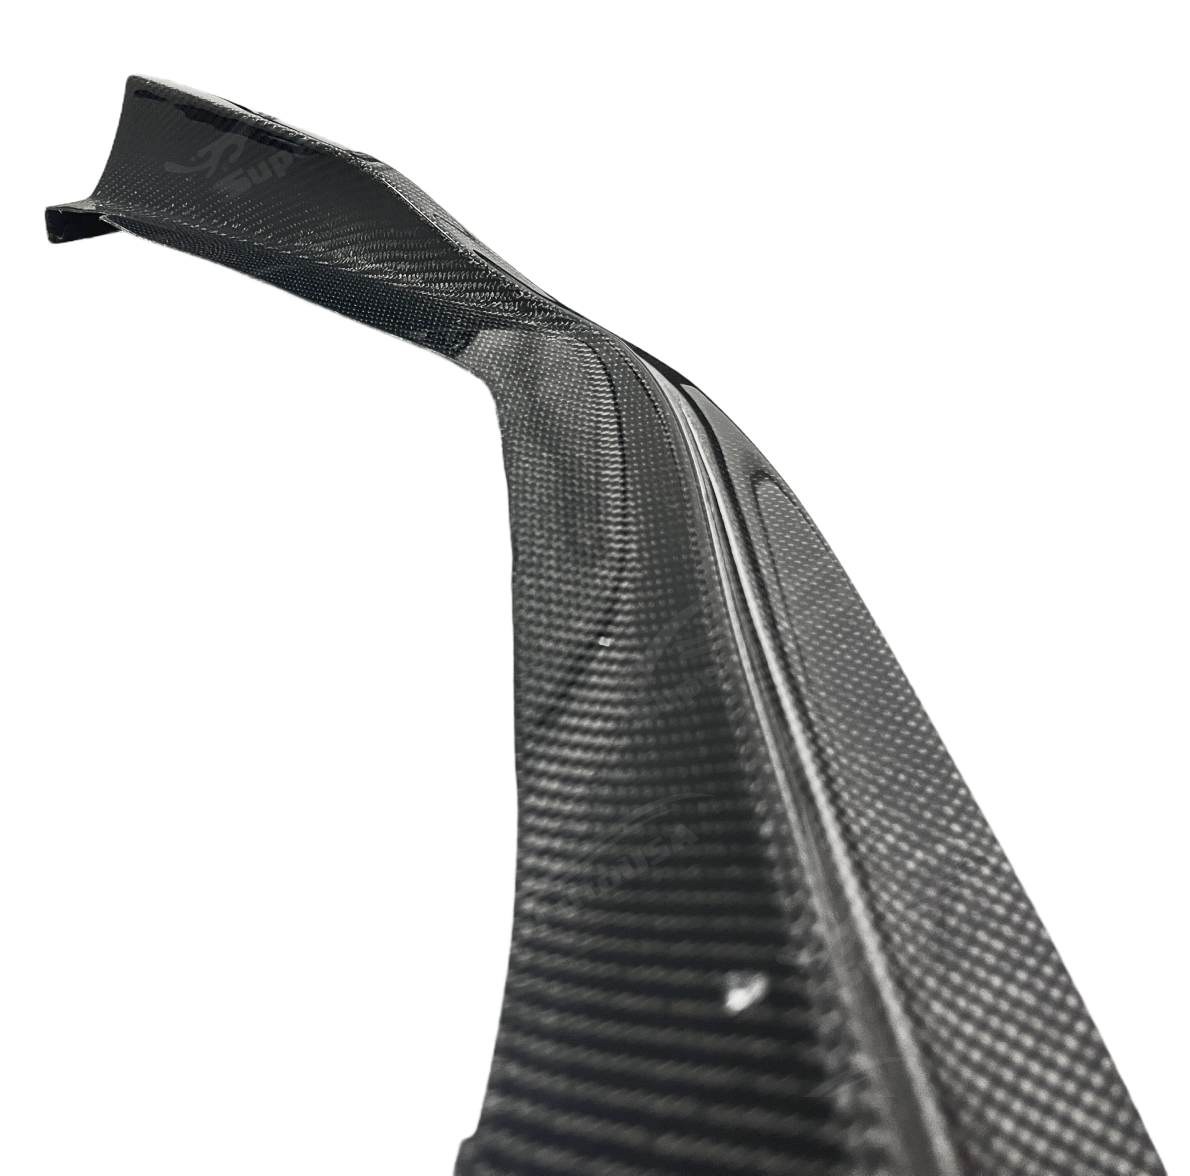 Enhance your 2015 Subaru WRX STI with Pure carbon fiber front splitter